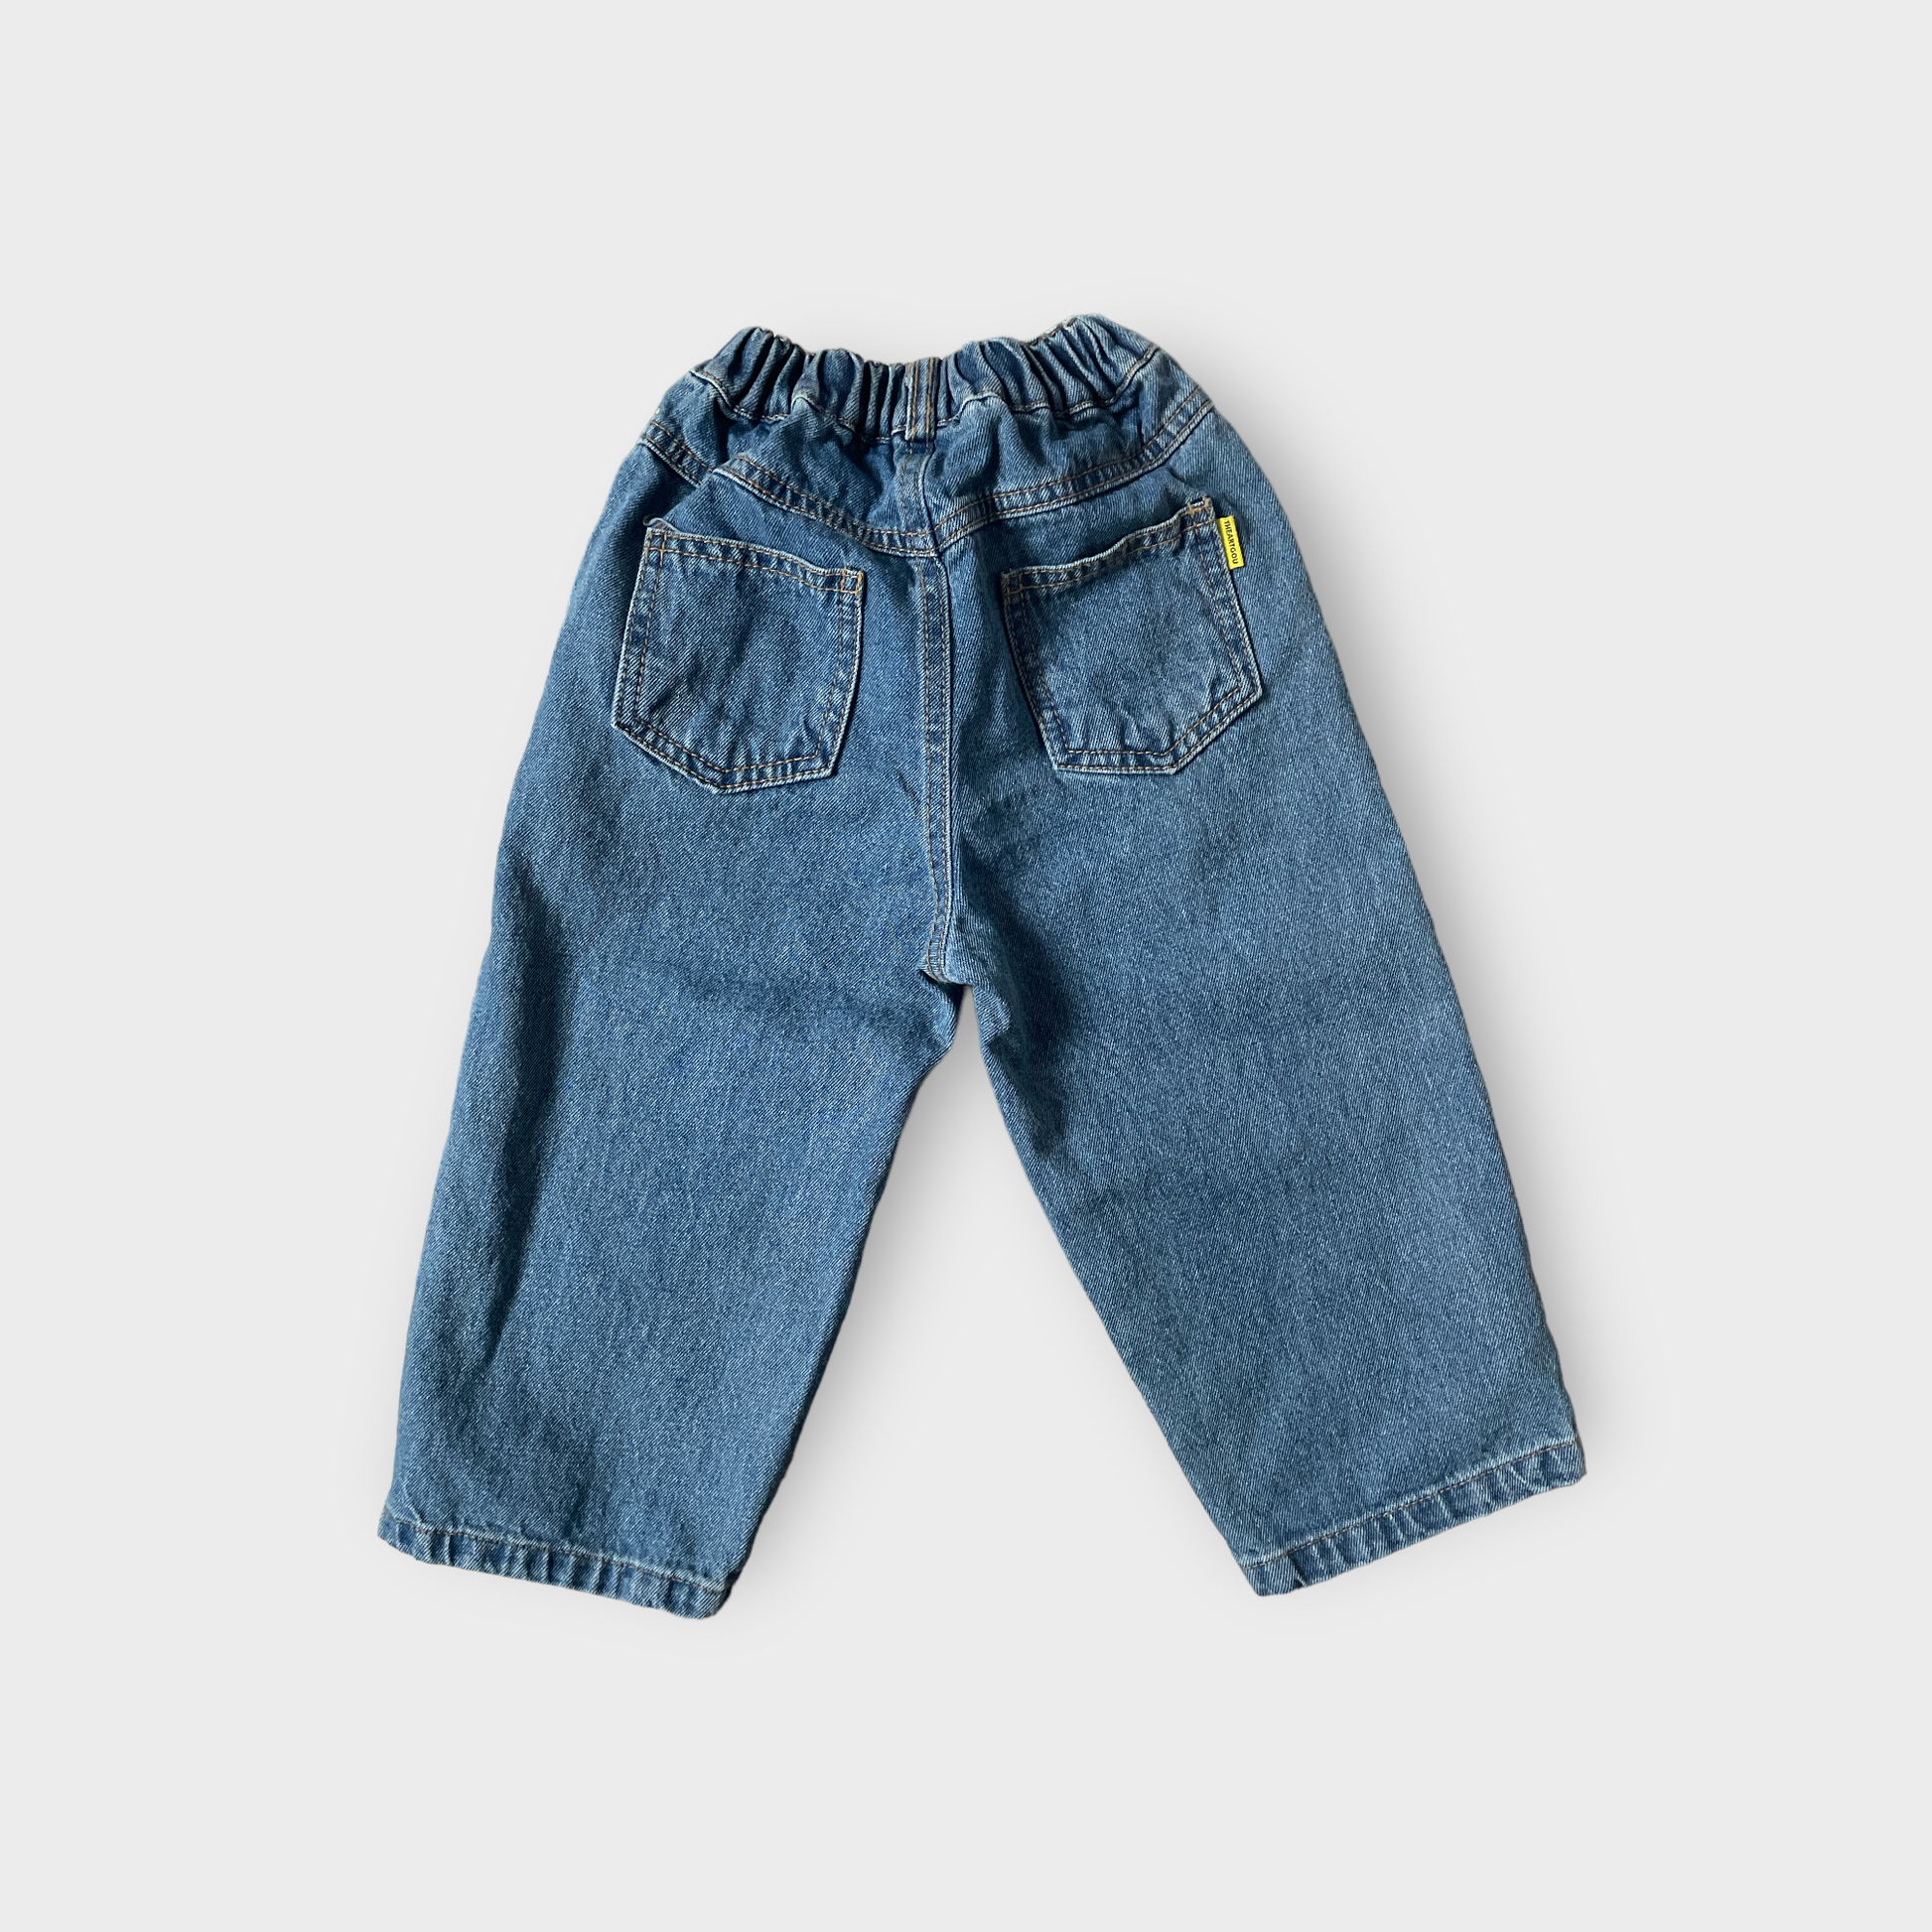 kids peekaboo pocket denim blue jeans pants trousers bottoms detailed pocket leg seam detail elastic waist stretchy back pockets